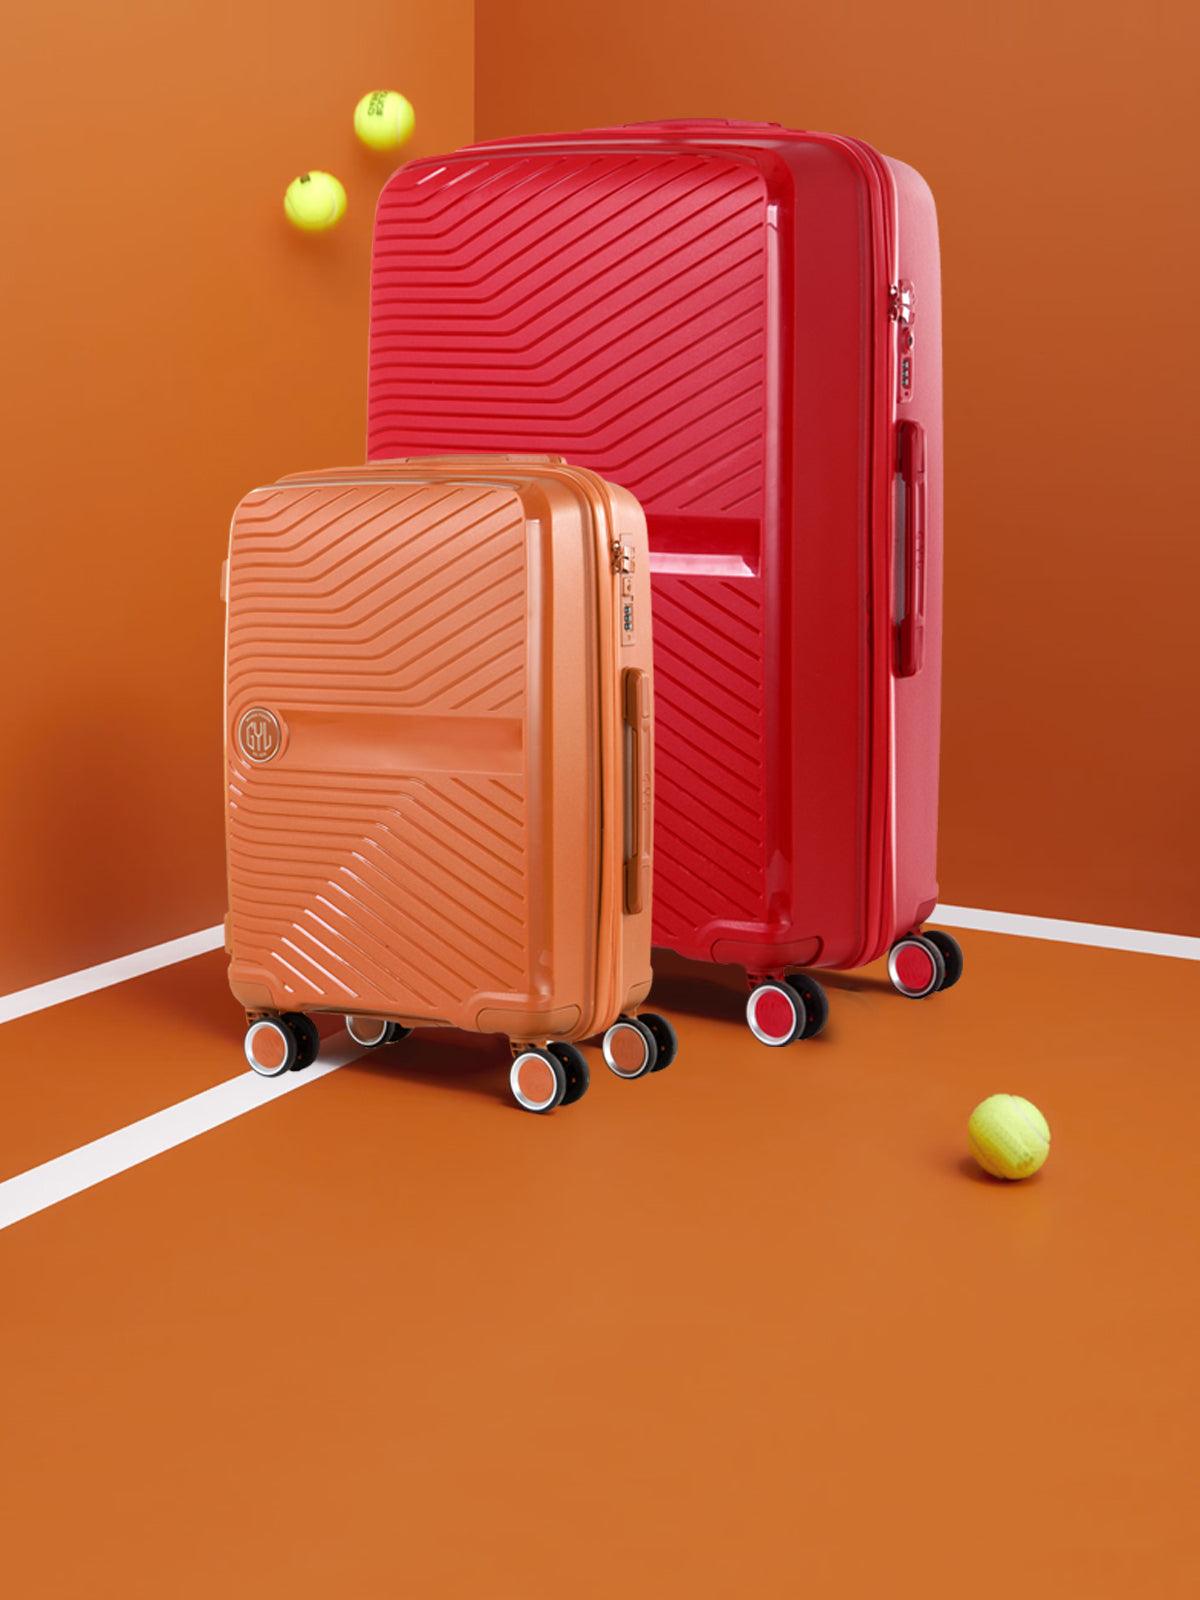 Cadenas de valise avion rouge